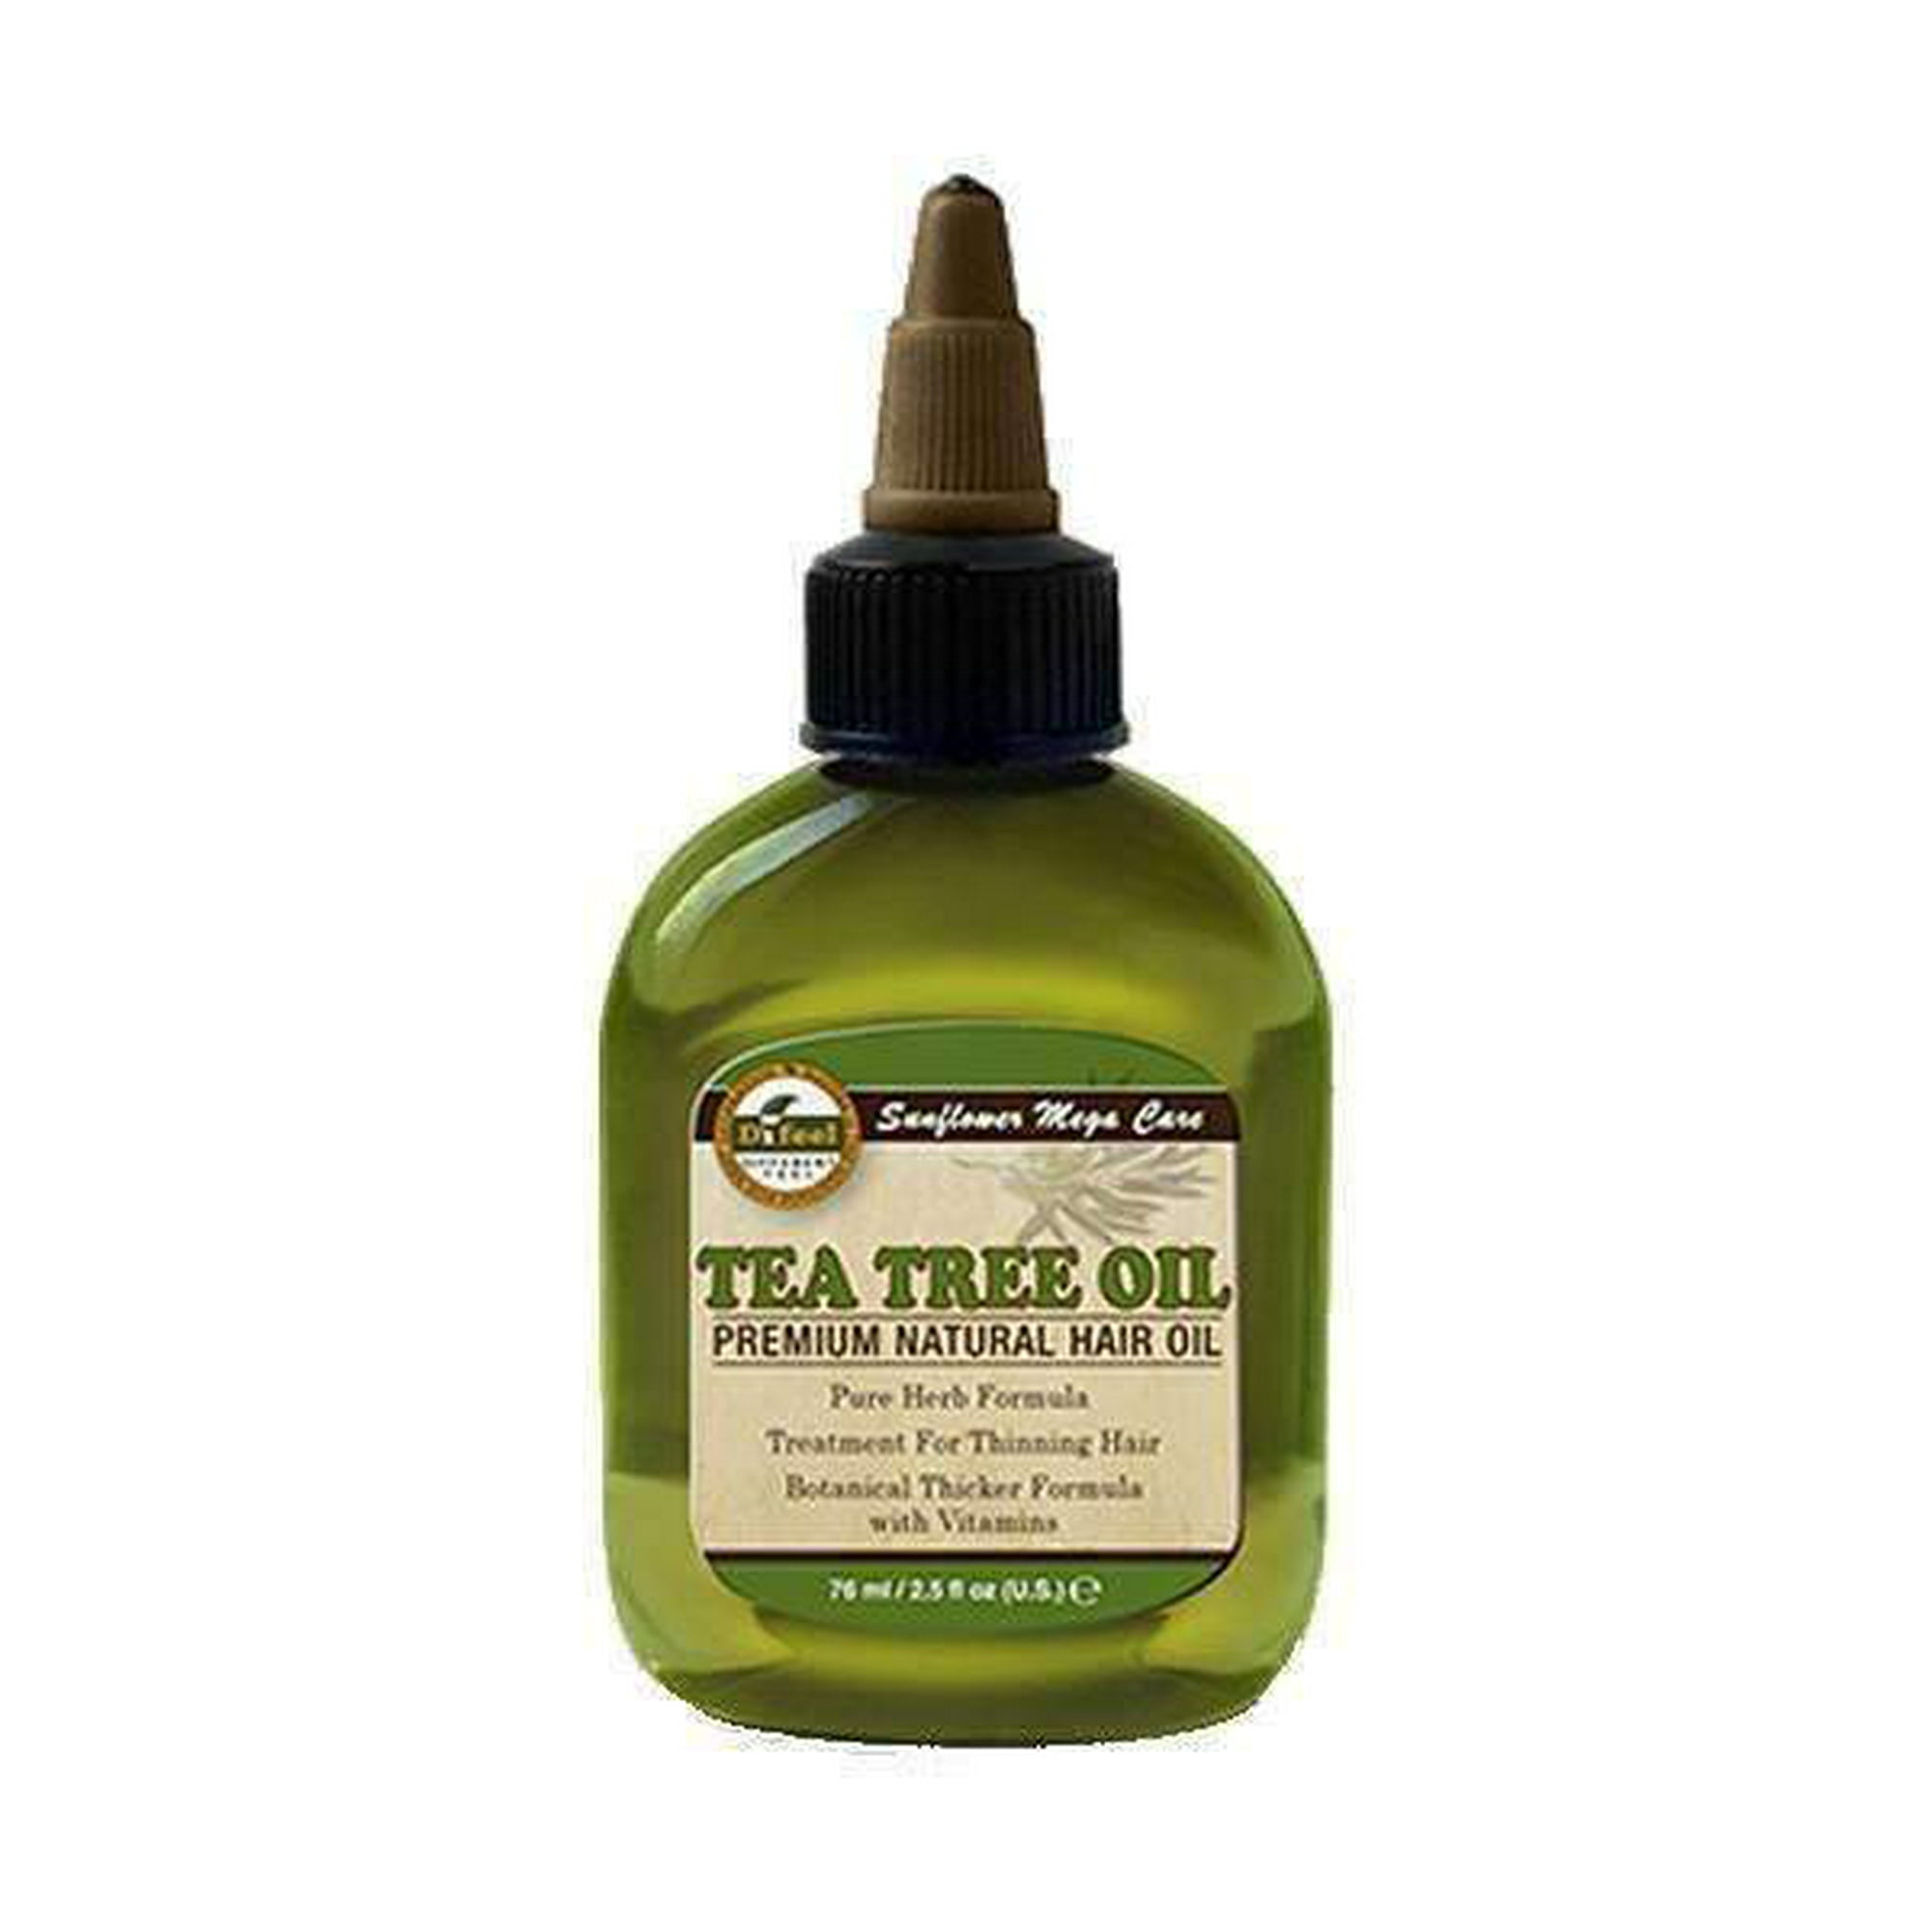 Sunflower Difeel Premium Natural Hair Oil - Tea Tree Oil 2.5oz | Walmart  Canada